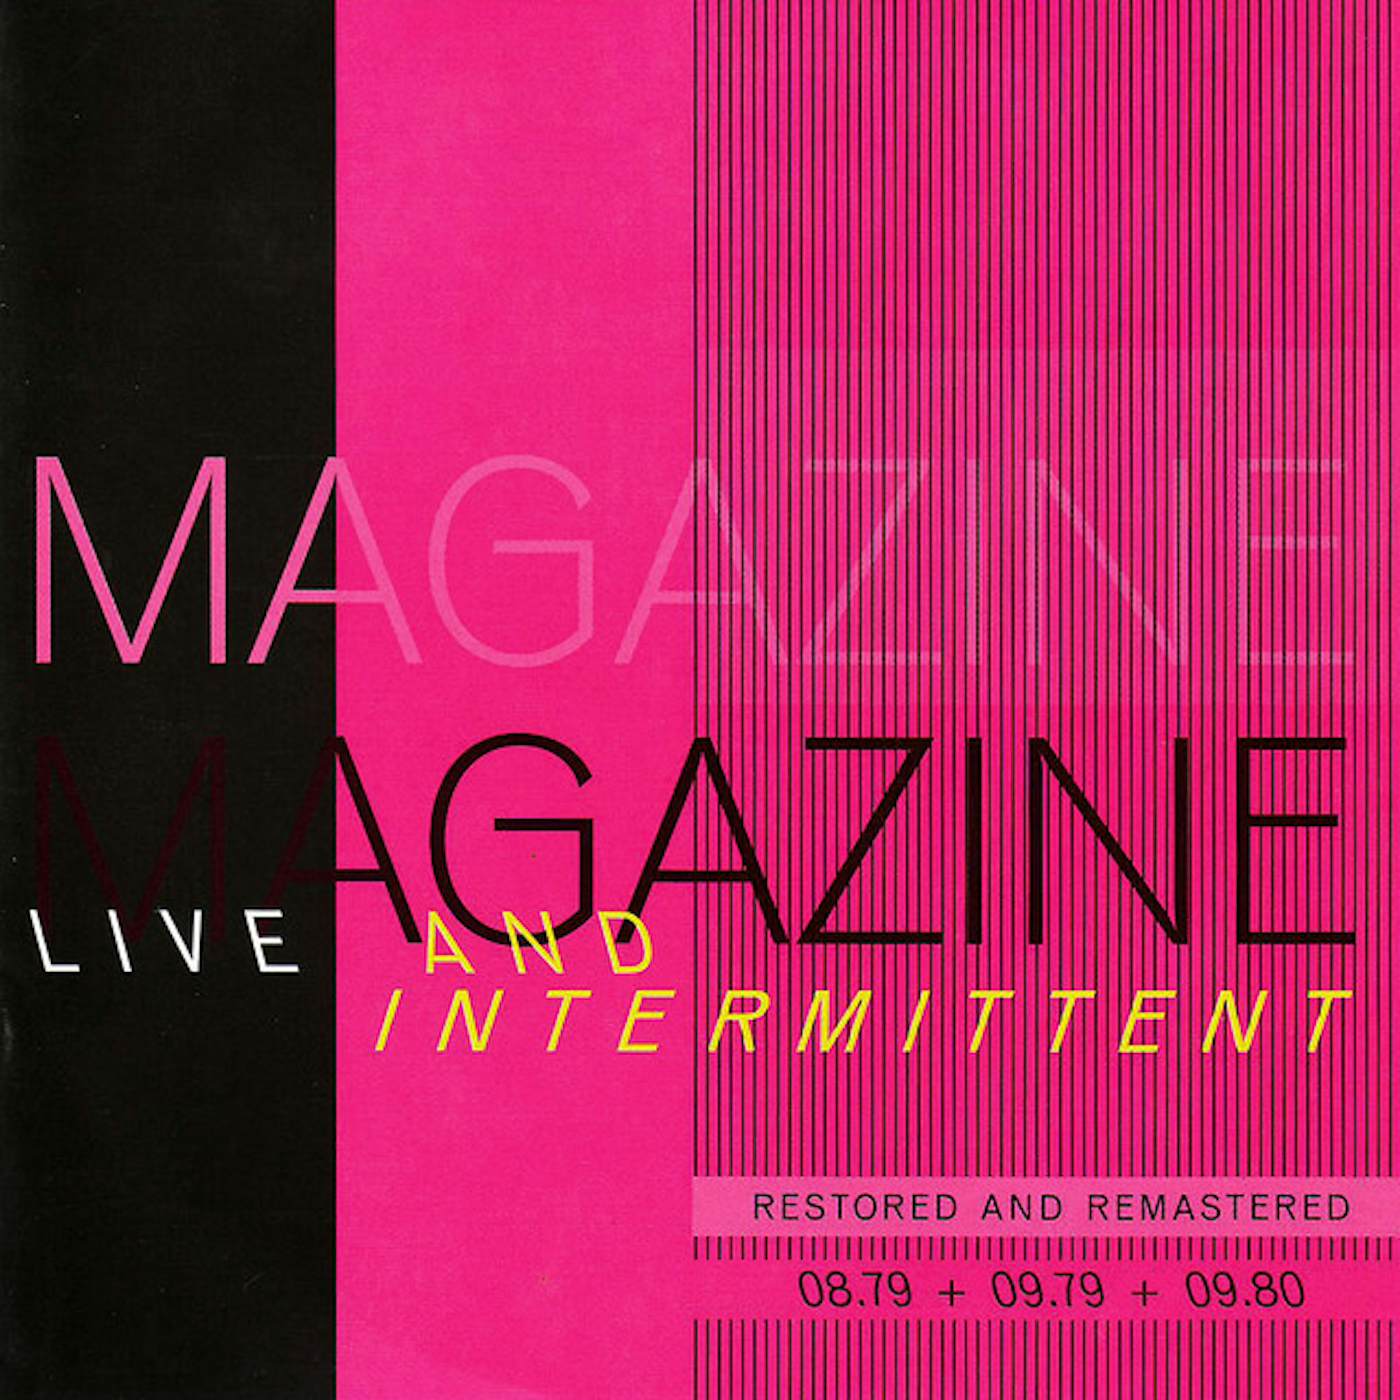 Magazine LIVE & INTERMITTENT CD